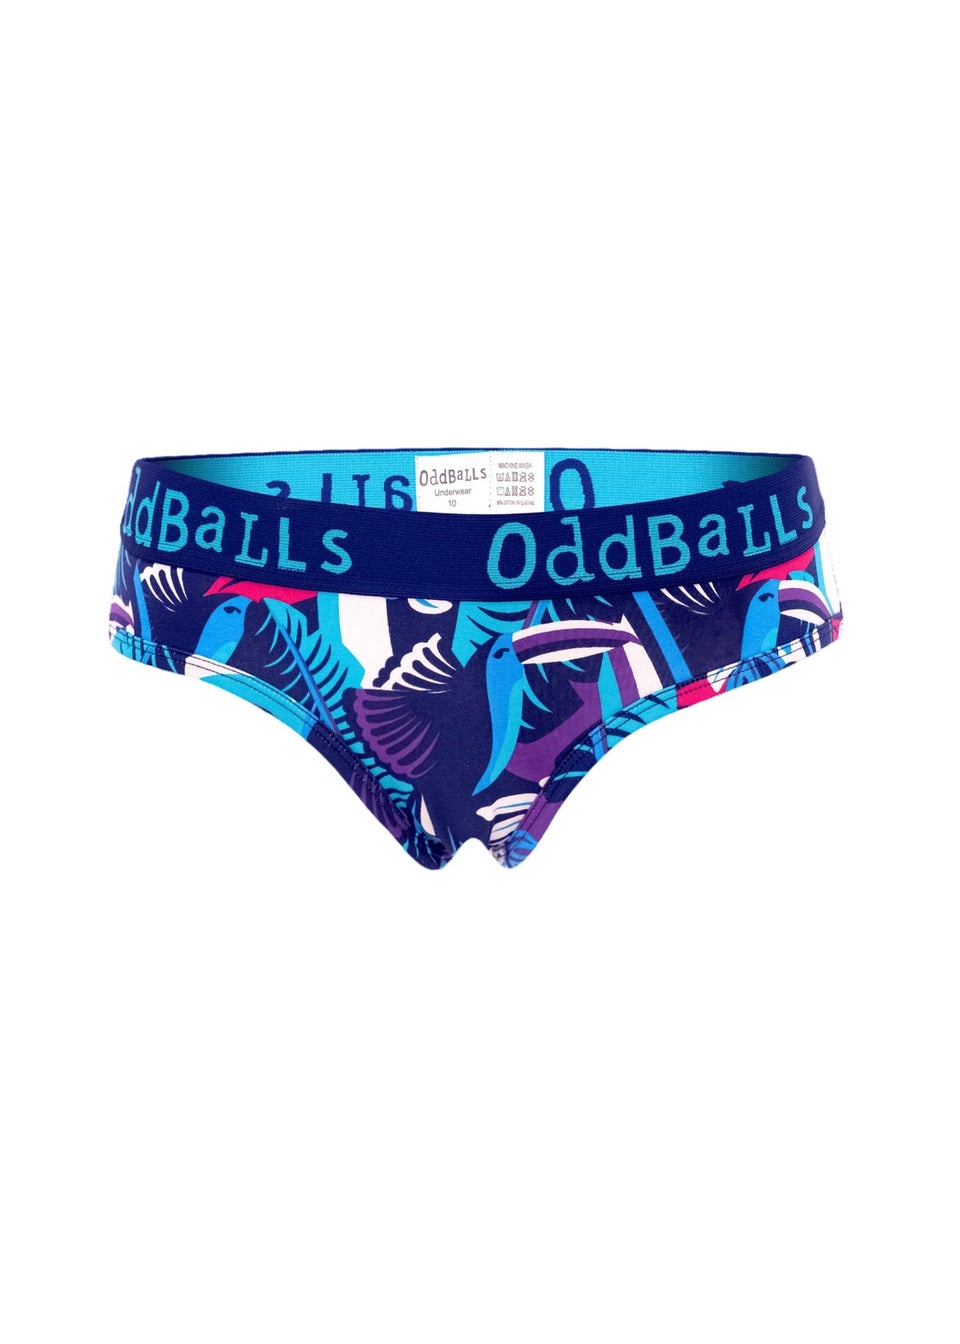 OddBalls Blue Toucan Briefs